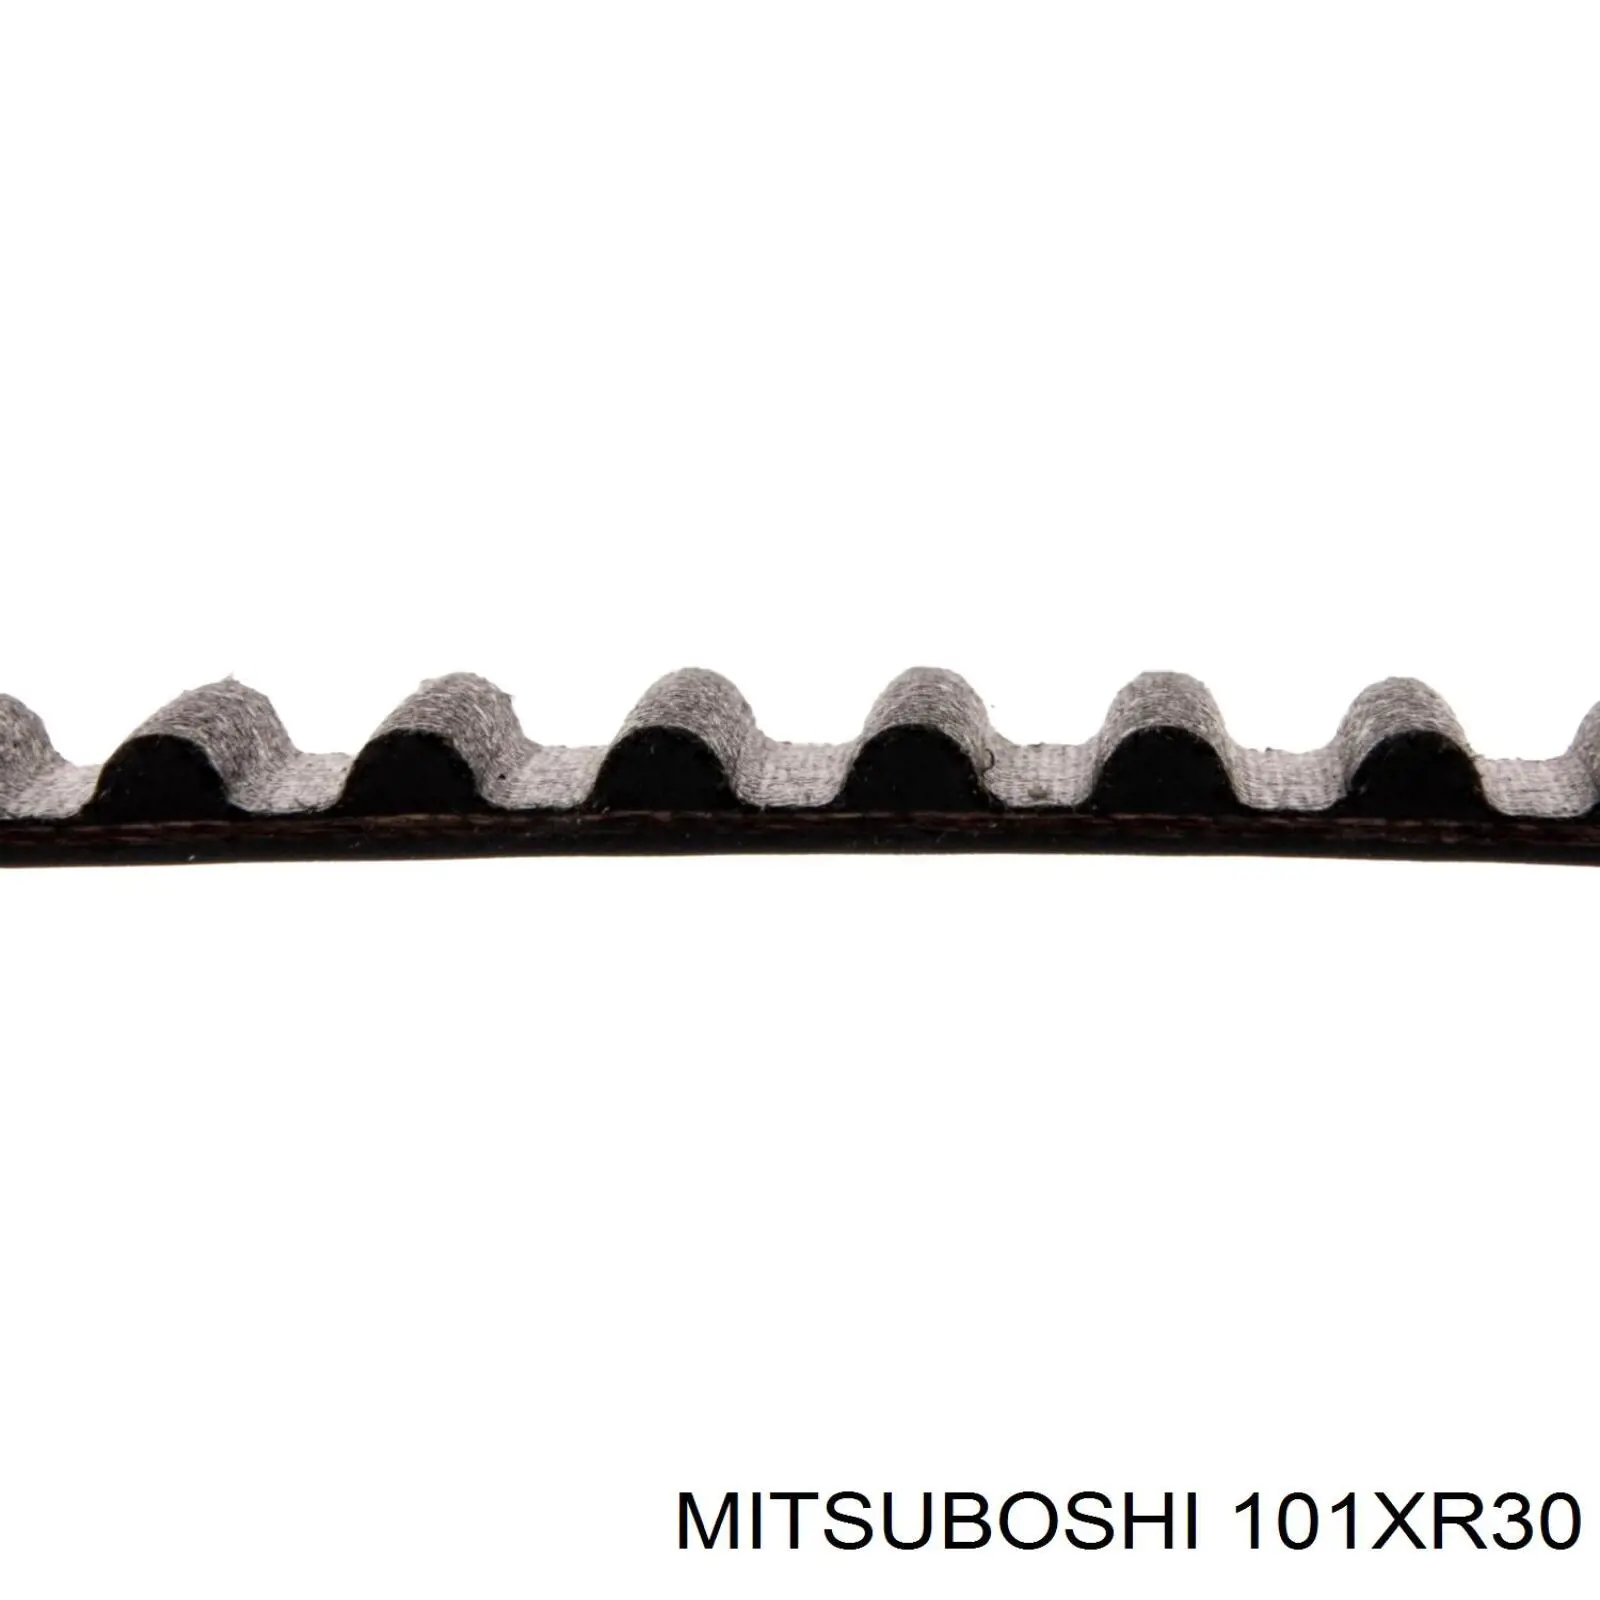 101XR30 Mitsuboshi correa distribucion